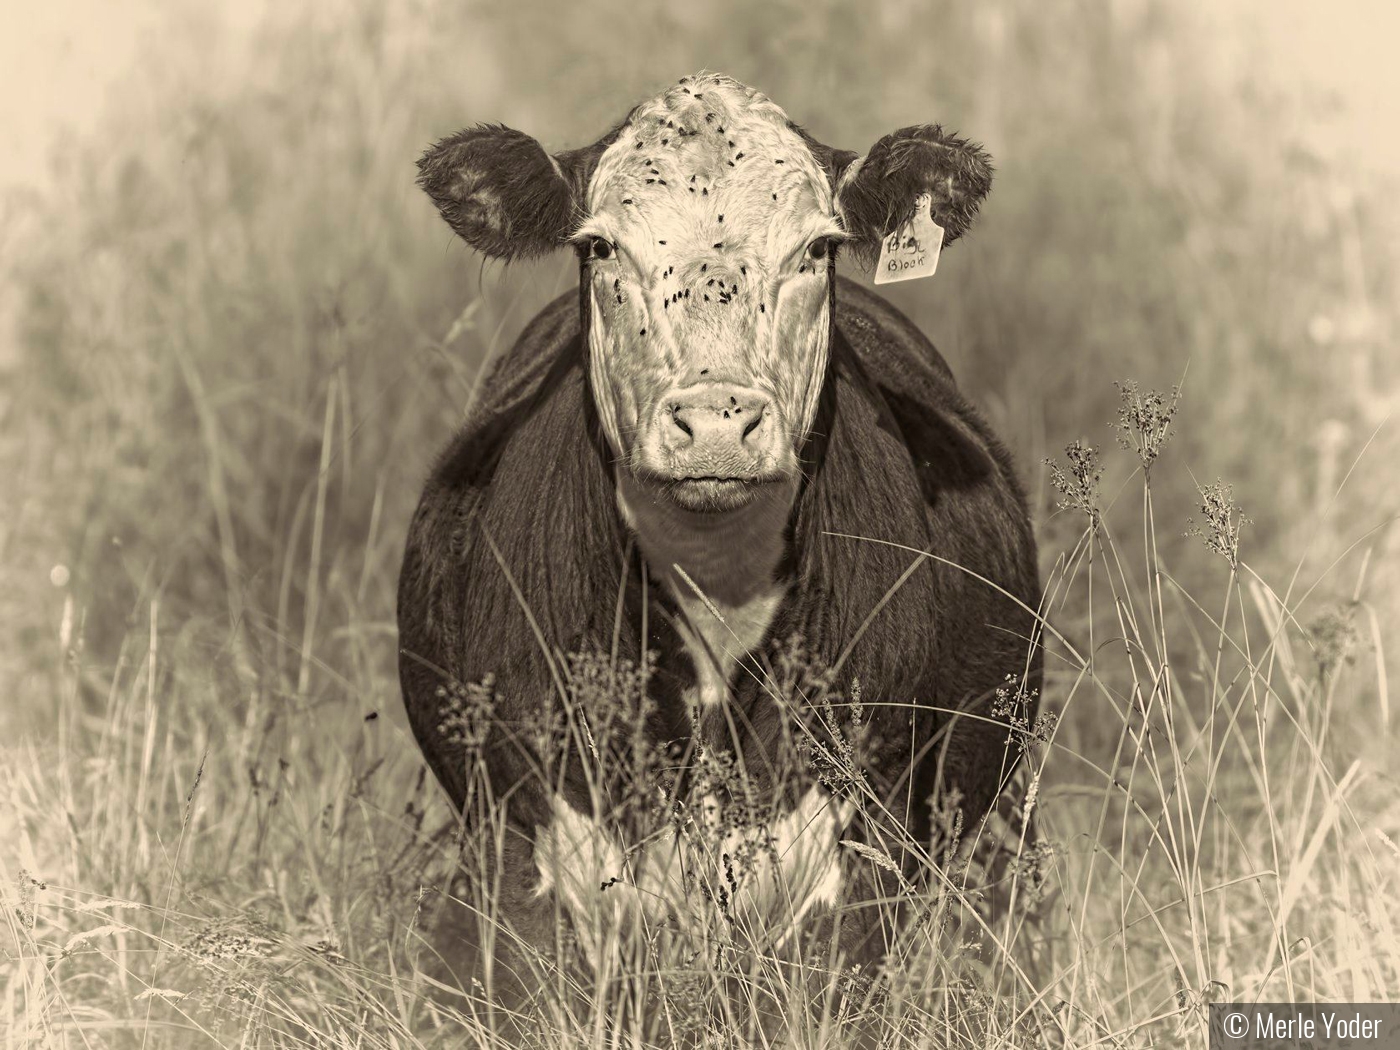 Cow in field by Merle Yoder